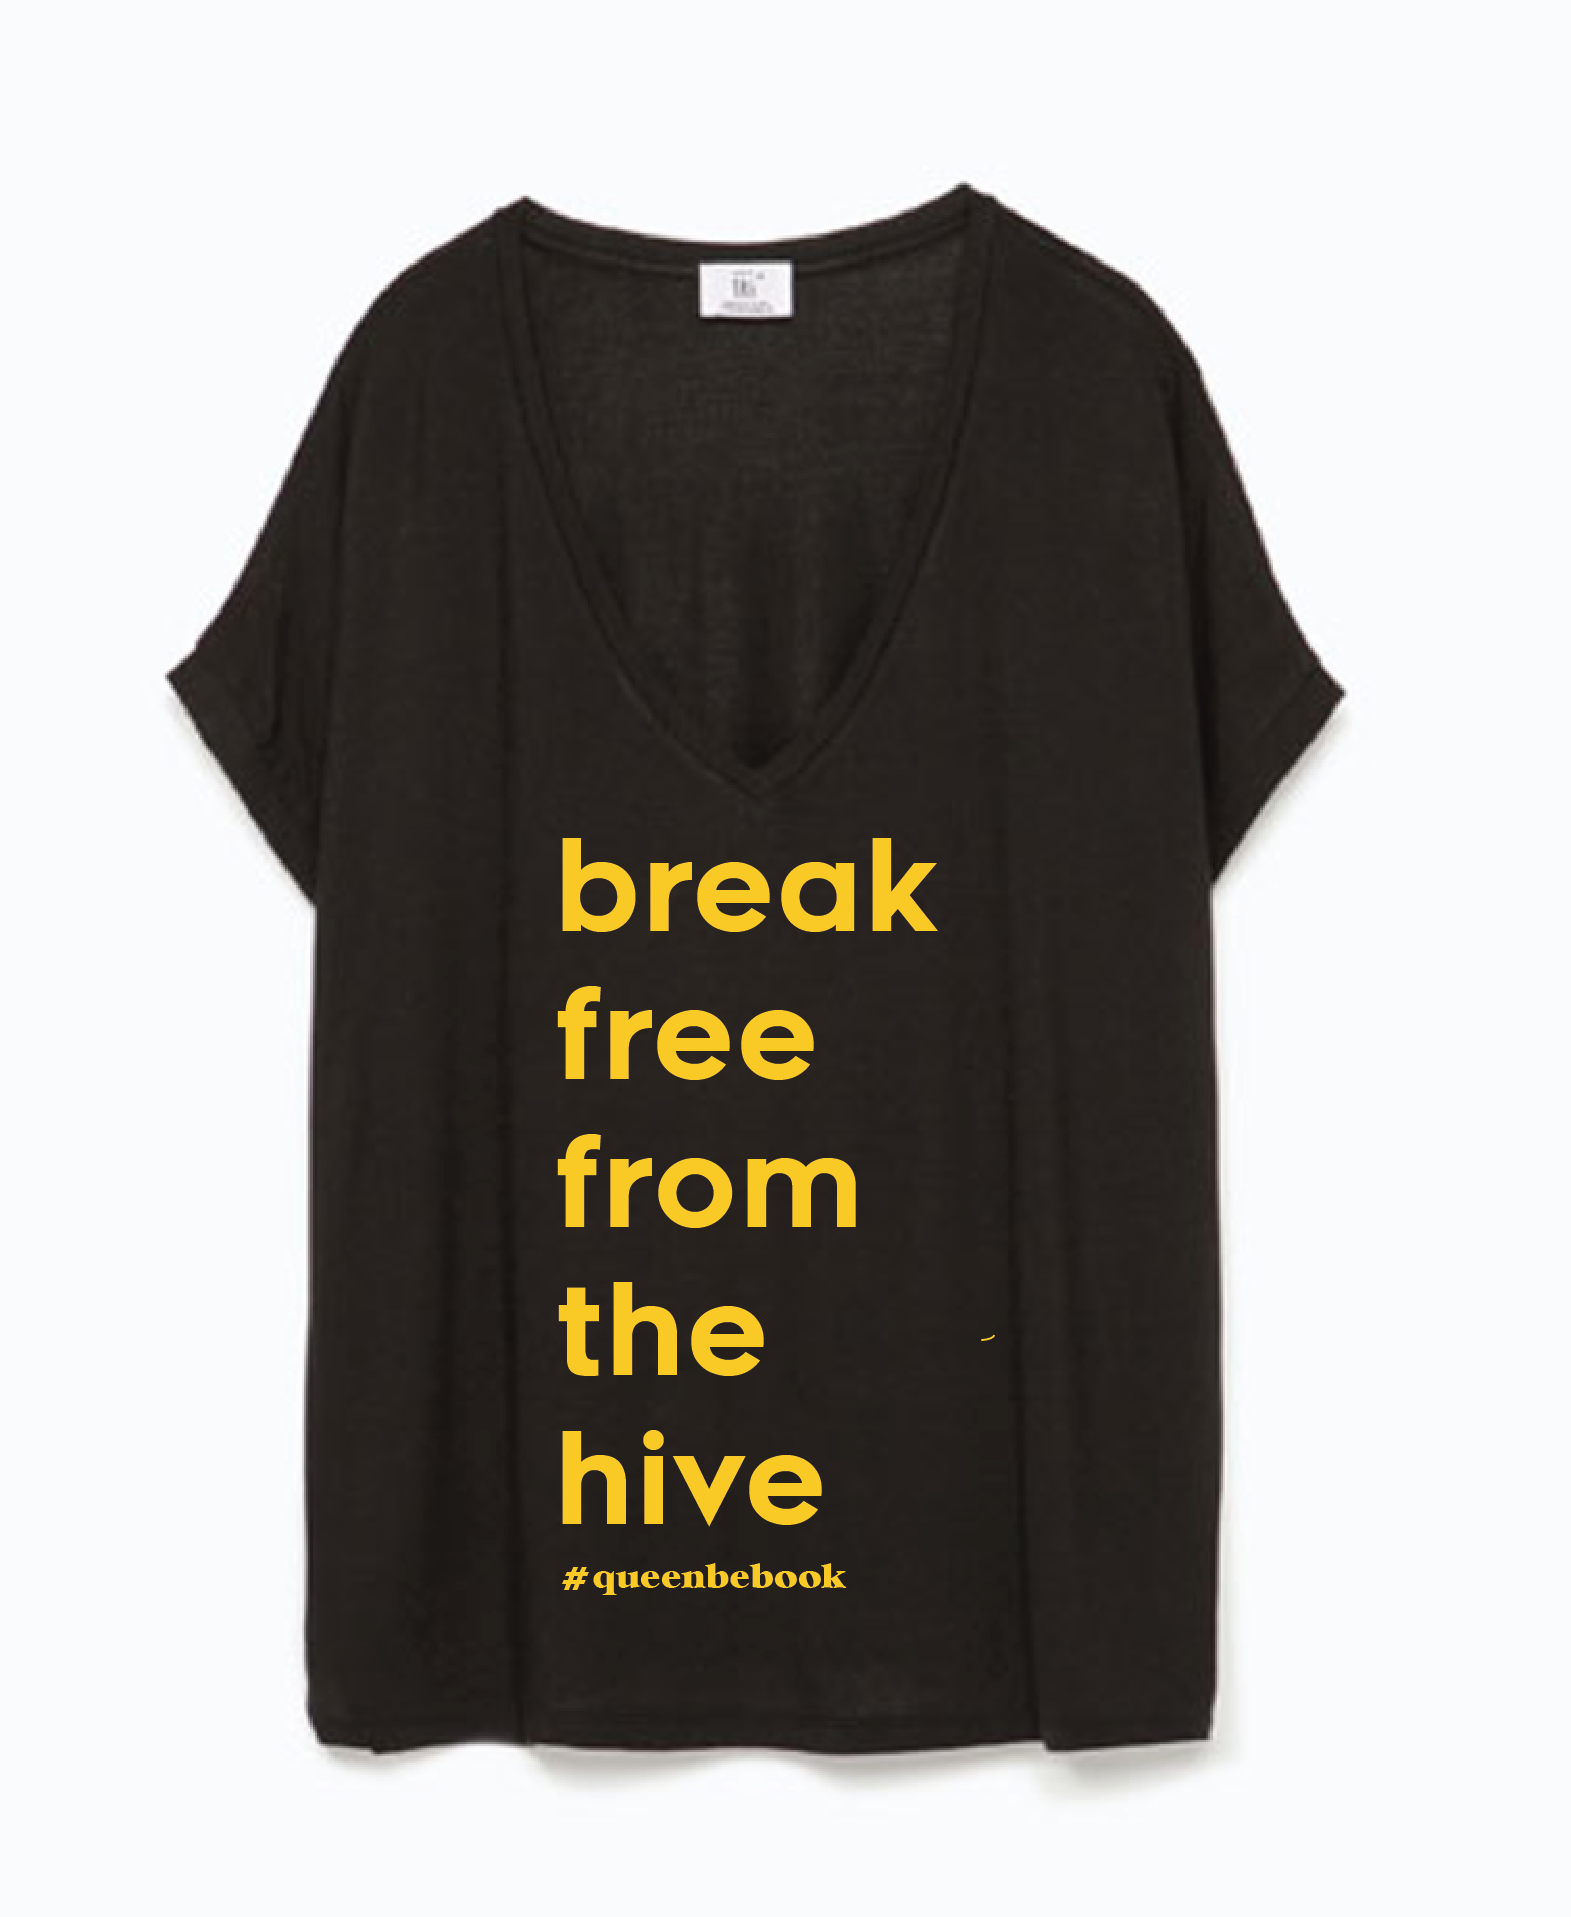 T-shirt break free from hive